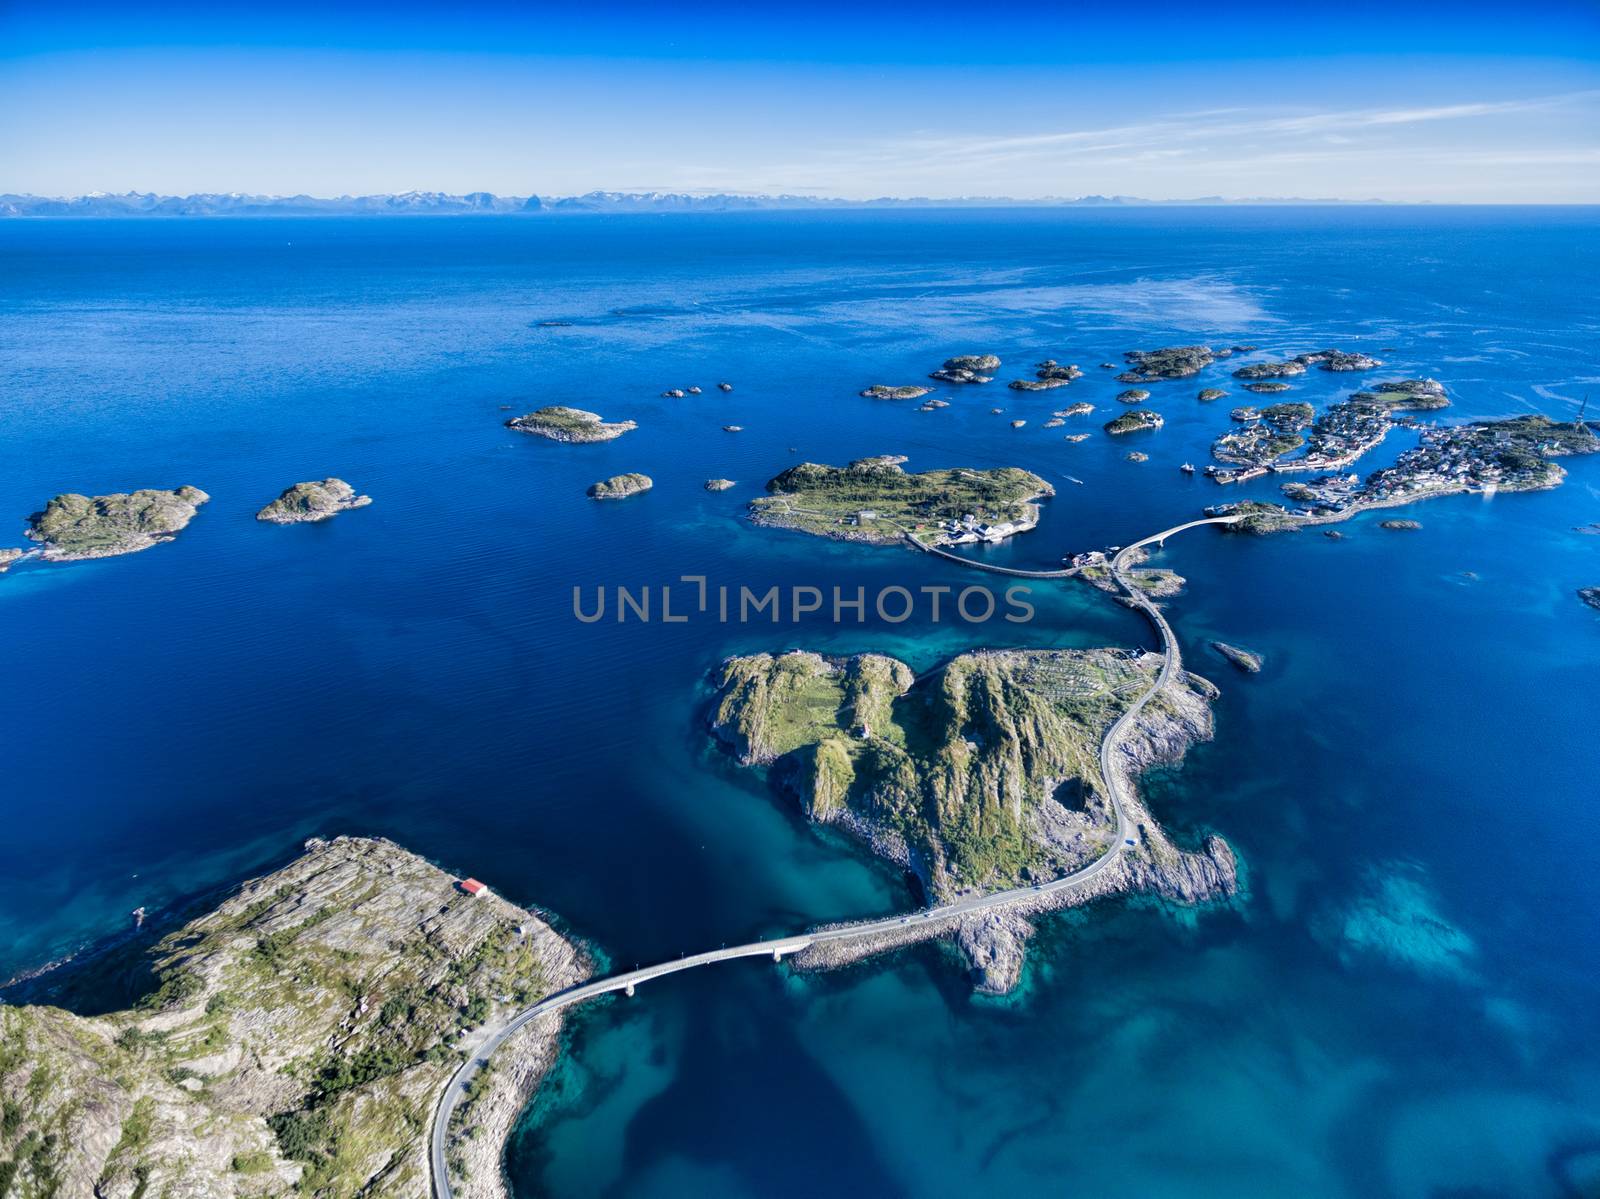 Breathtaking aerial view of Henningsvaer, fishing port on Lofoten islands